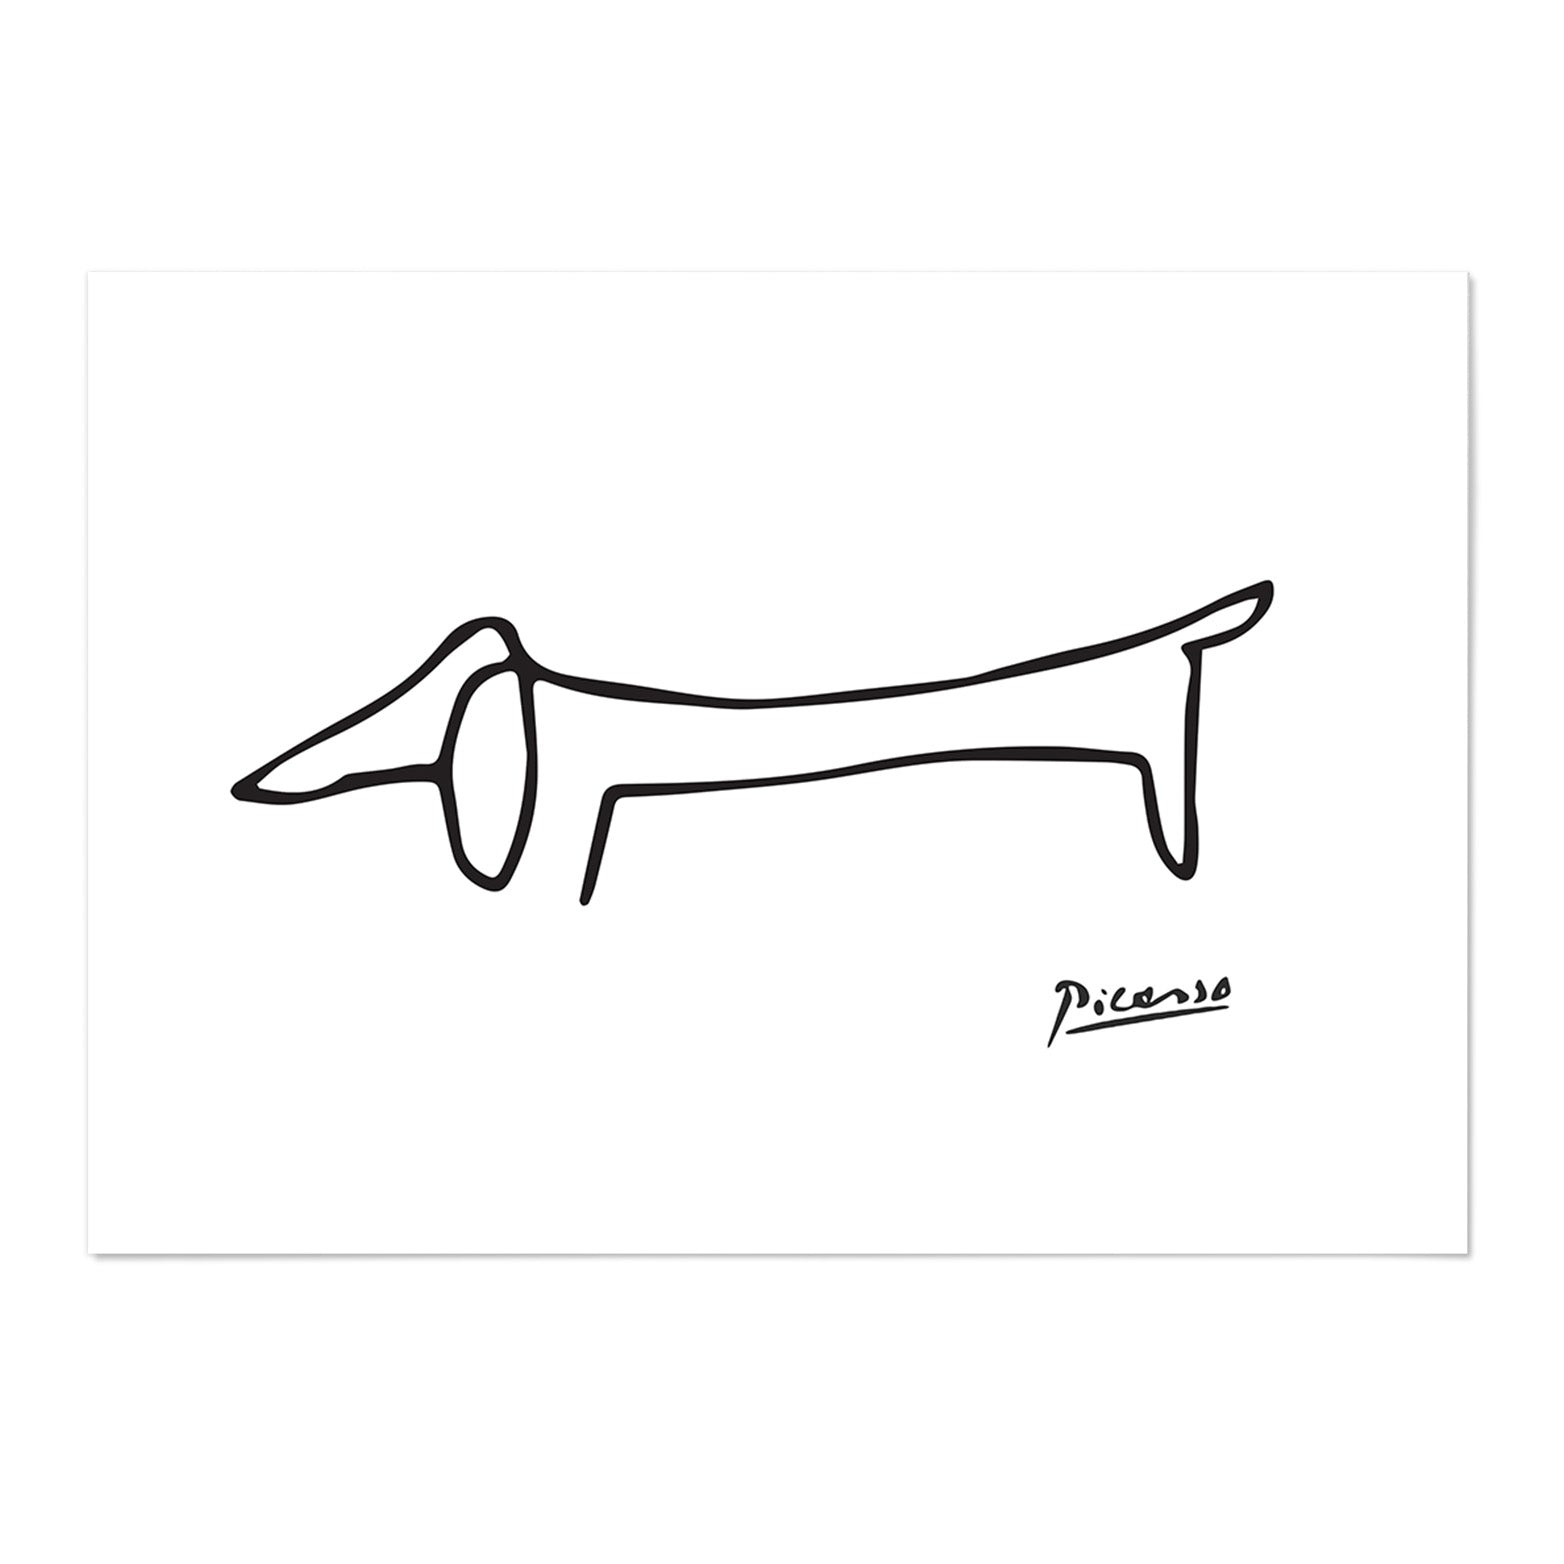 Picasso Dachshund Line Sketch Art Print - MJ Design Studio